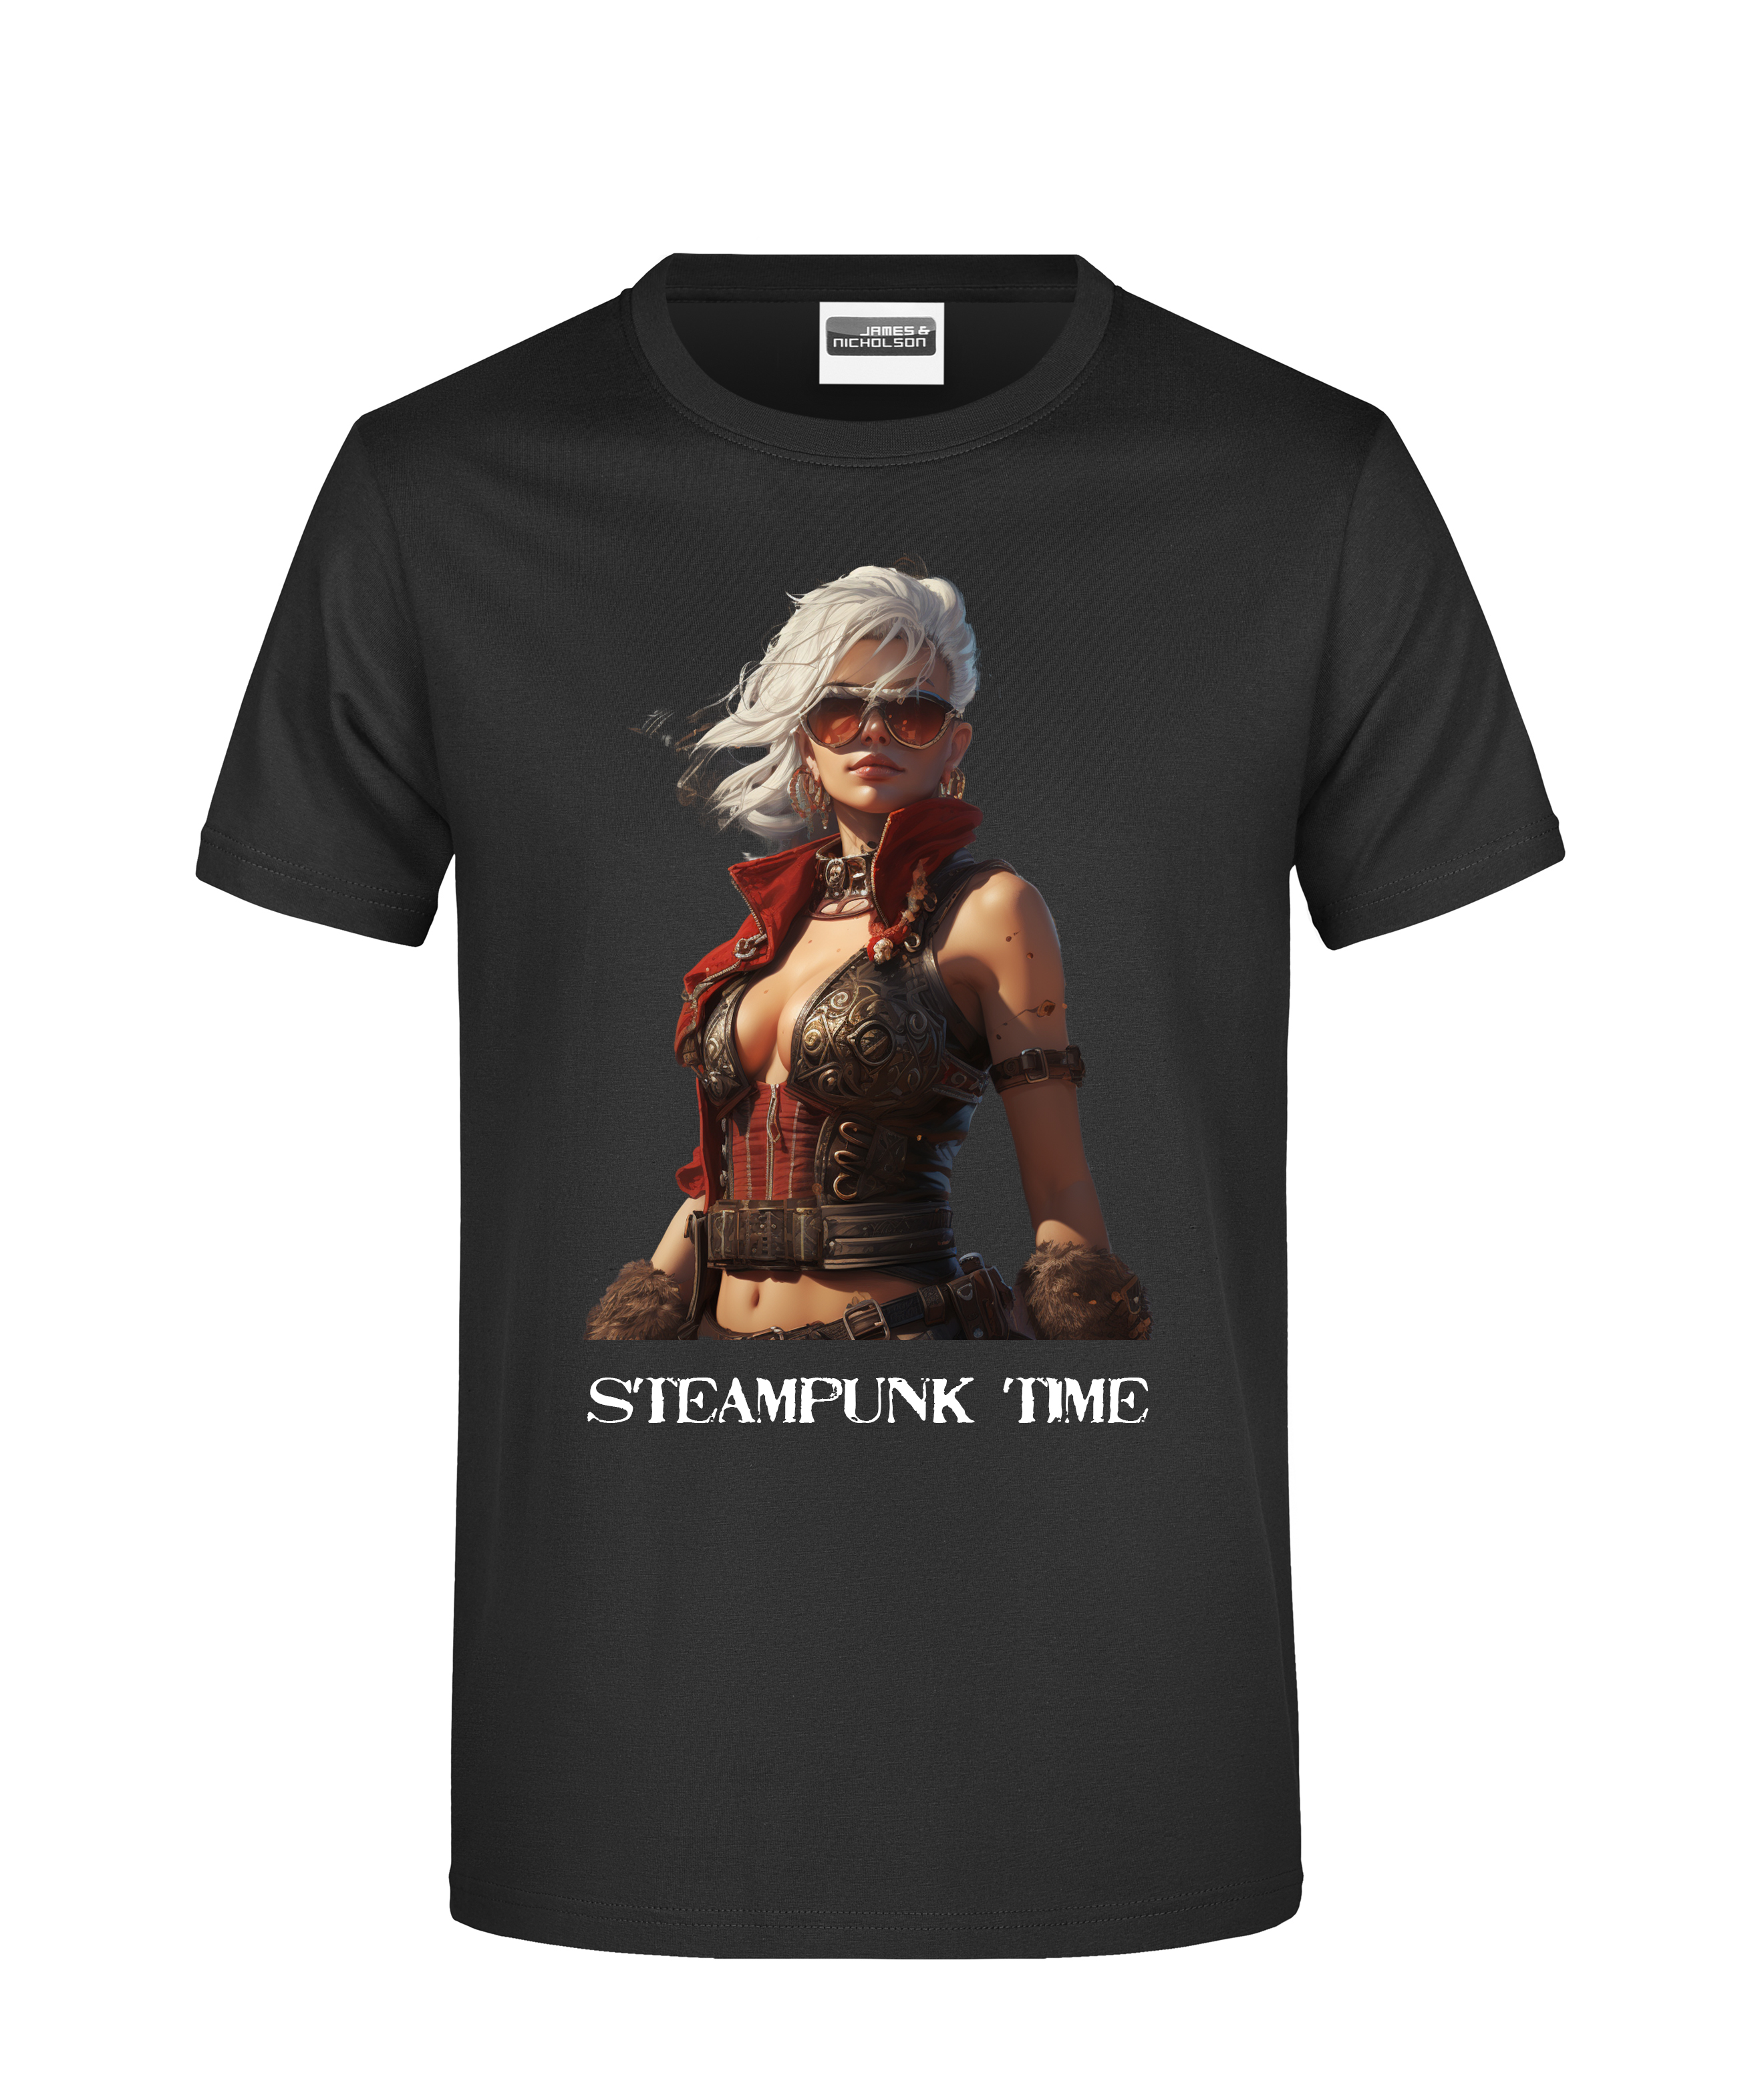 Herren-T-Shirt "Steampunk time" 